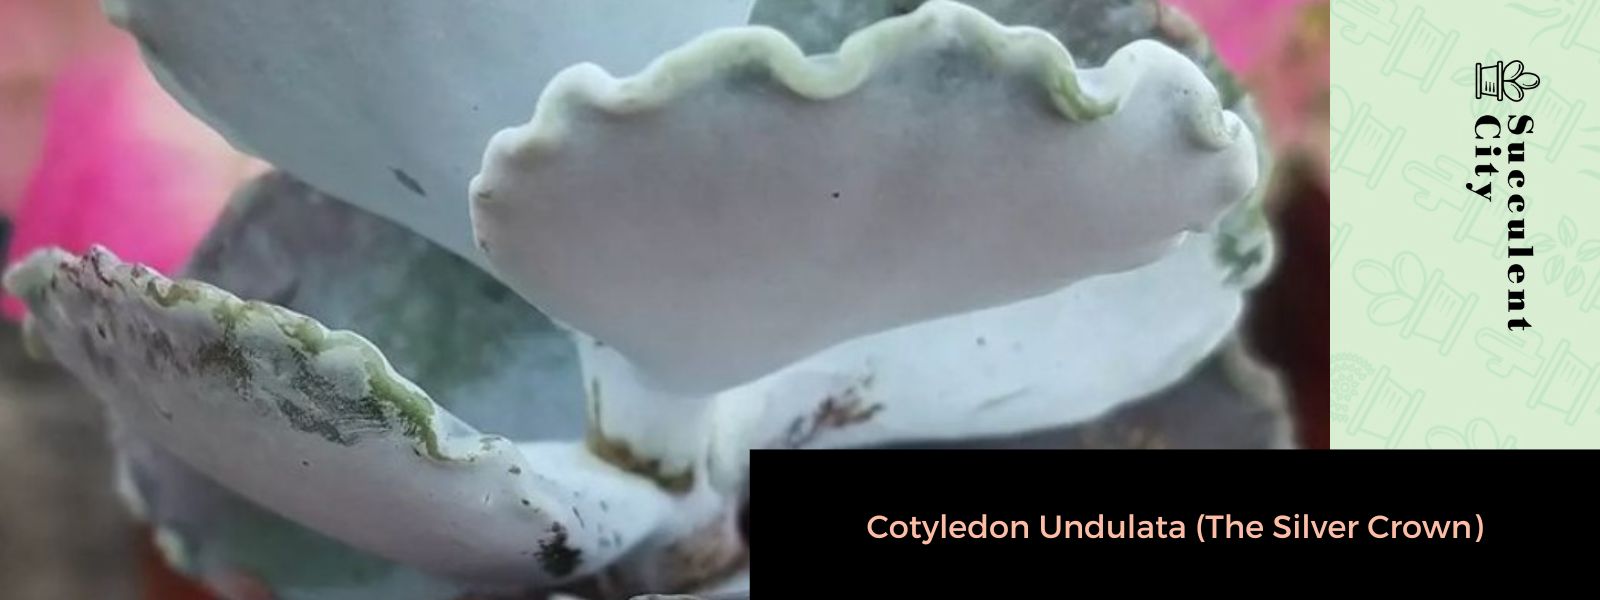 La corona de plata 'Cotyledon Undulata'